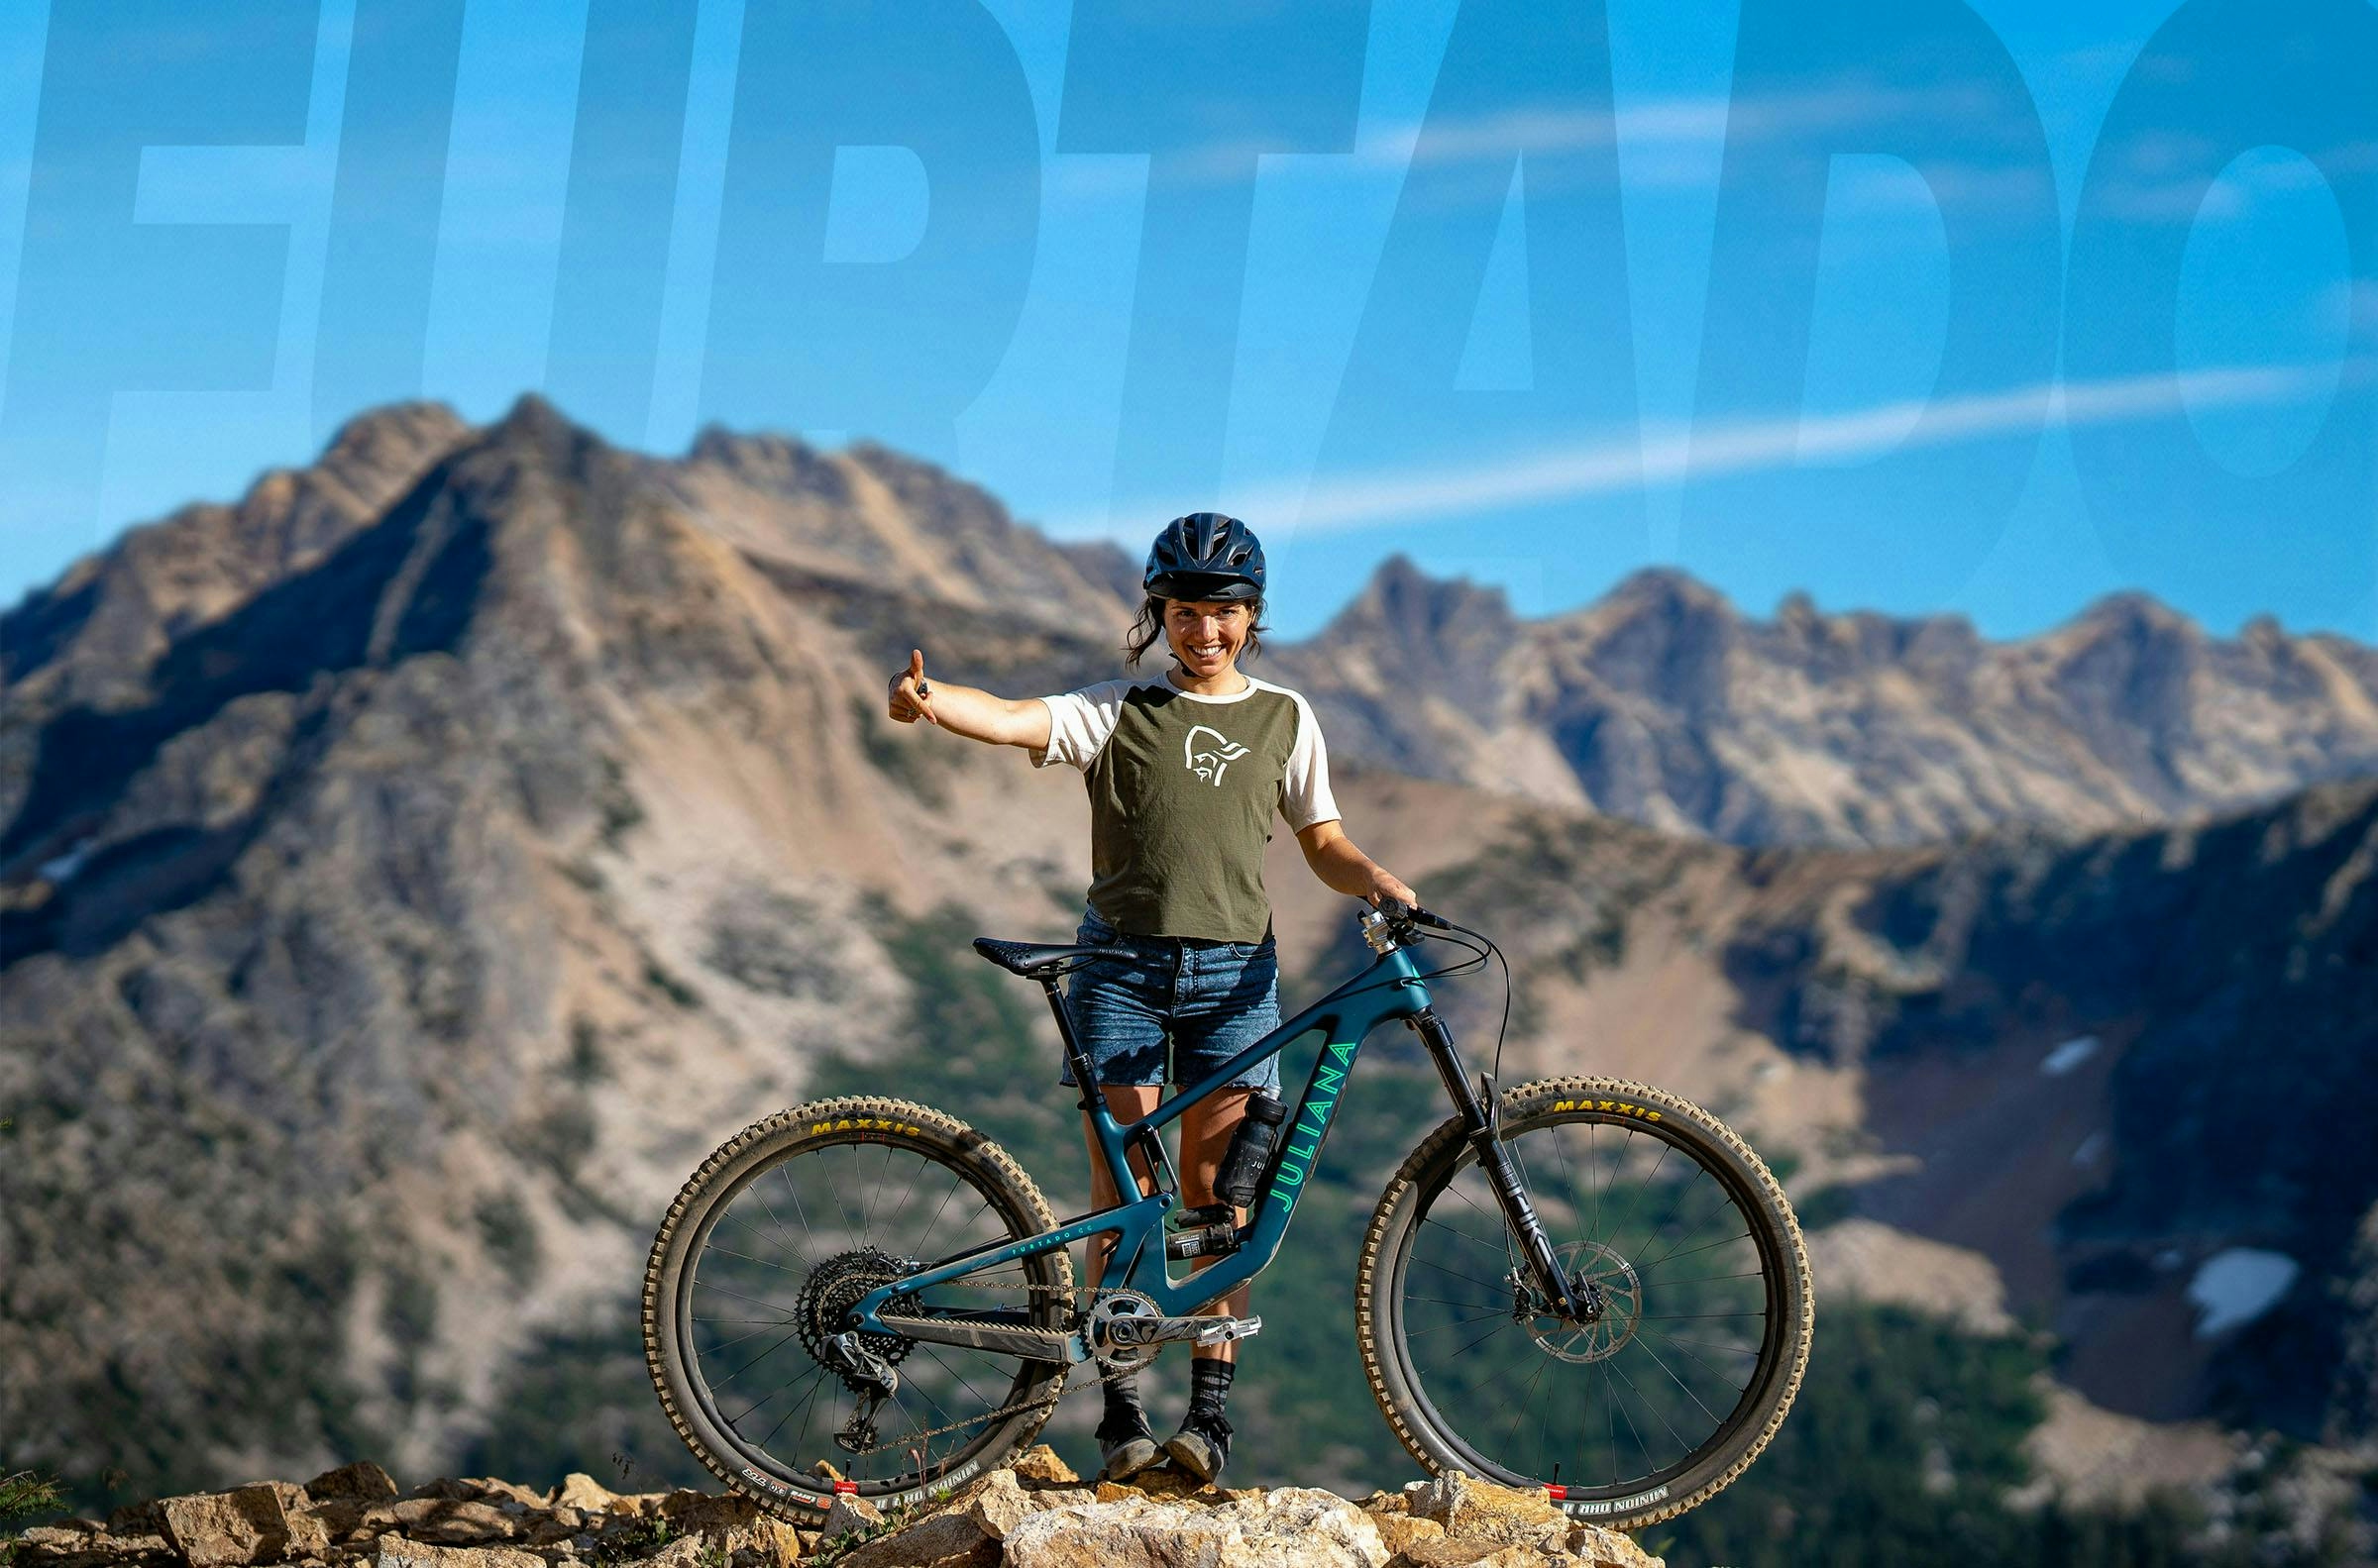 Juliana Bicycles rider Delilah Cupp posing with her Furtado 5 MX full suspension mountain bike